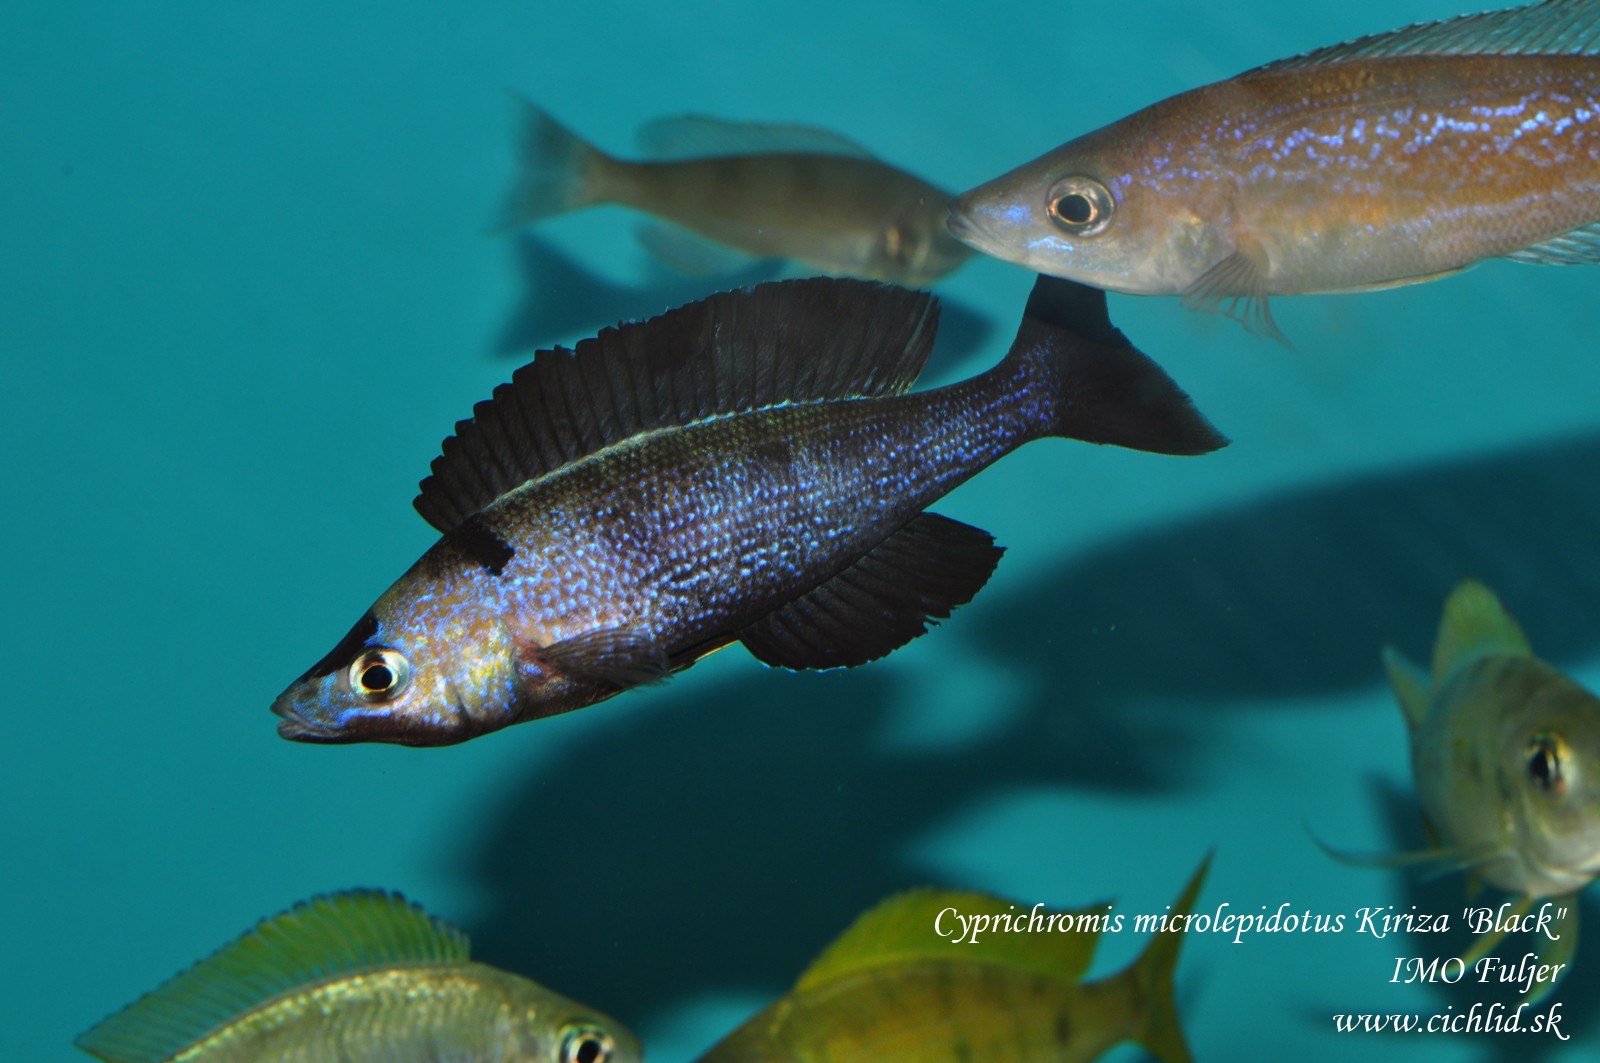 cyprichromis microlepidotus kiriza